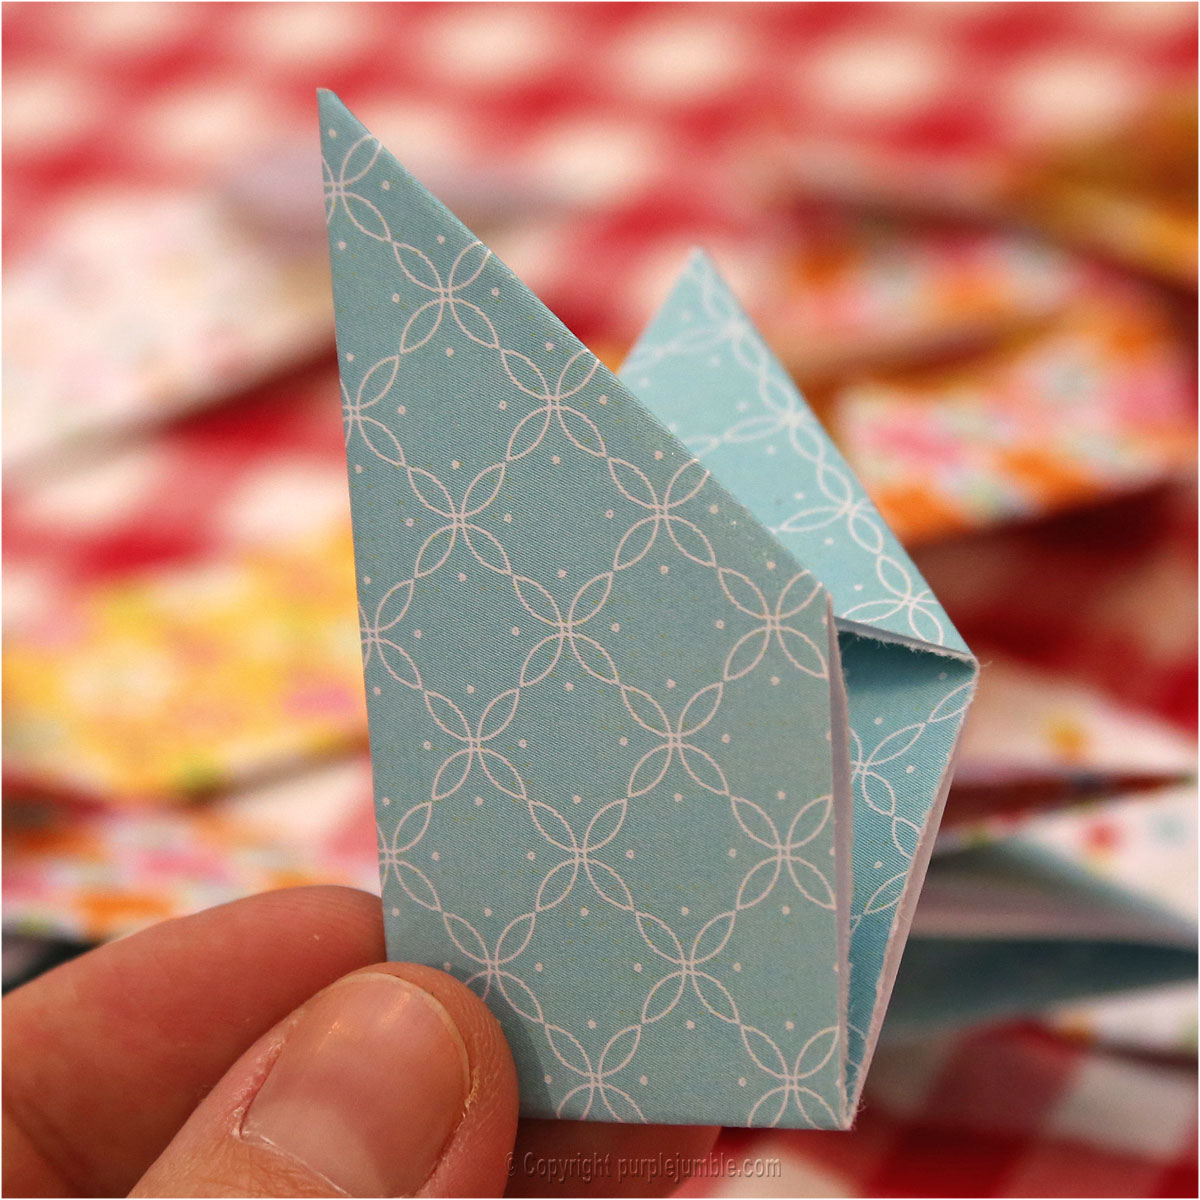 DIY étoile origami fifi mandirac